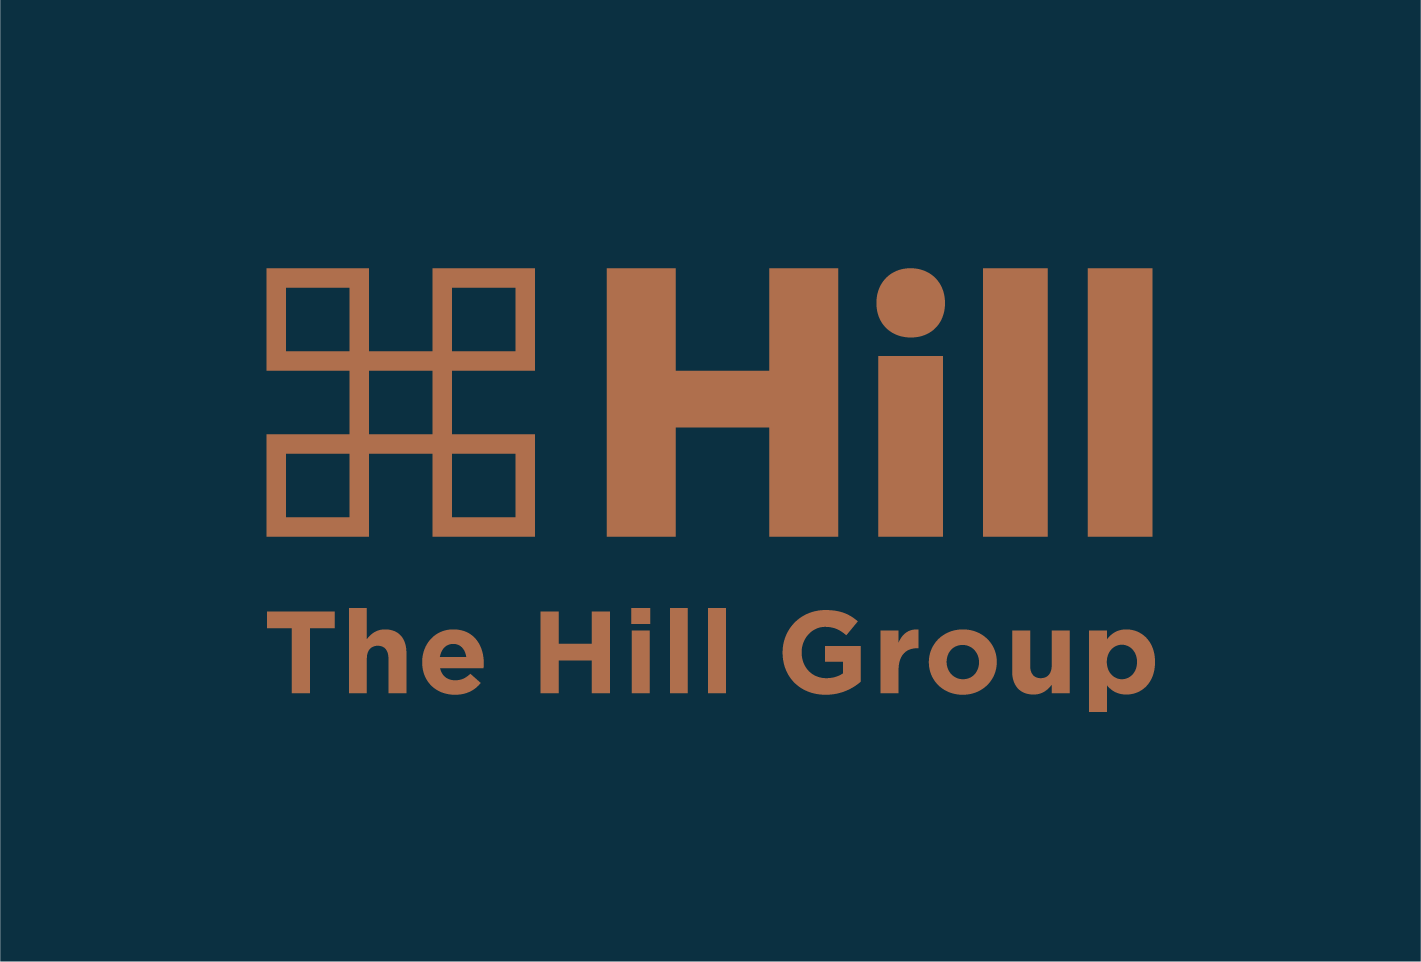 Hill_corporate_copper_logo_RGB_justified_bold